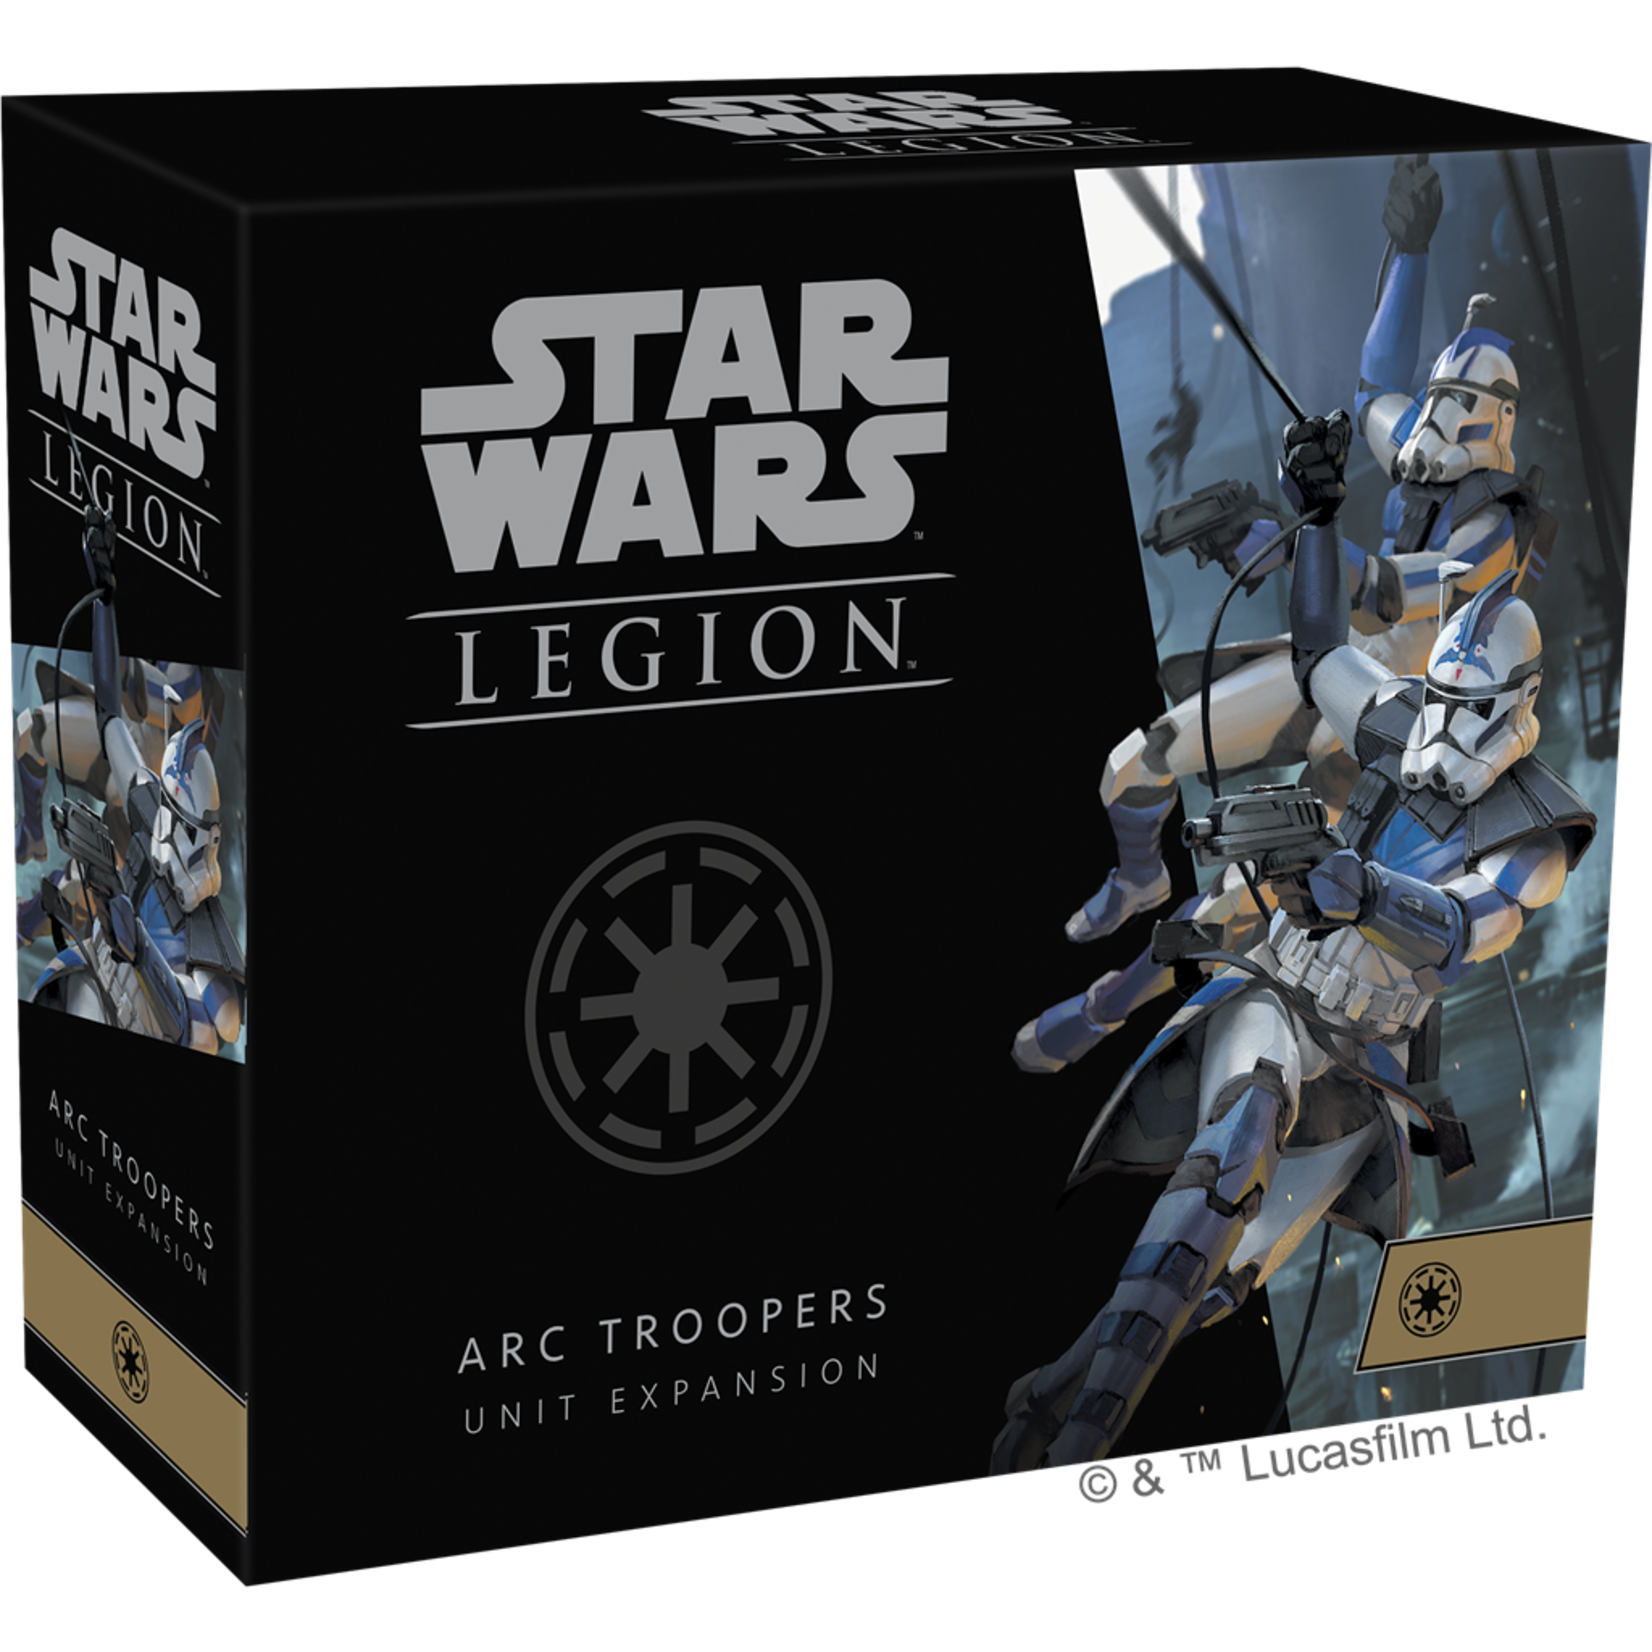 Star wars: Legion Star Wars Legion ARC Troopers